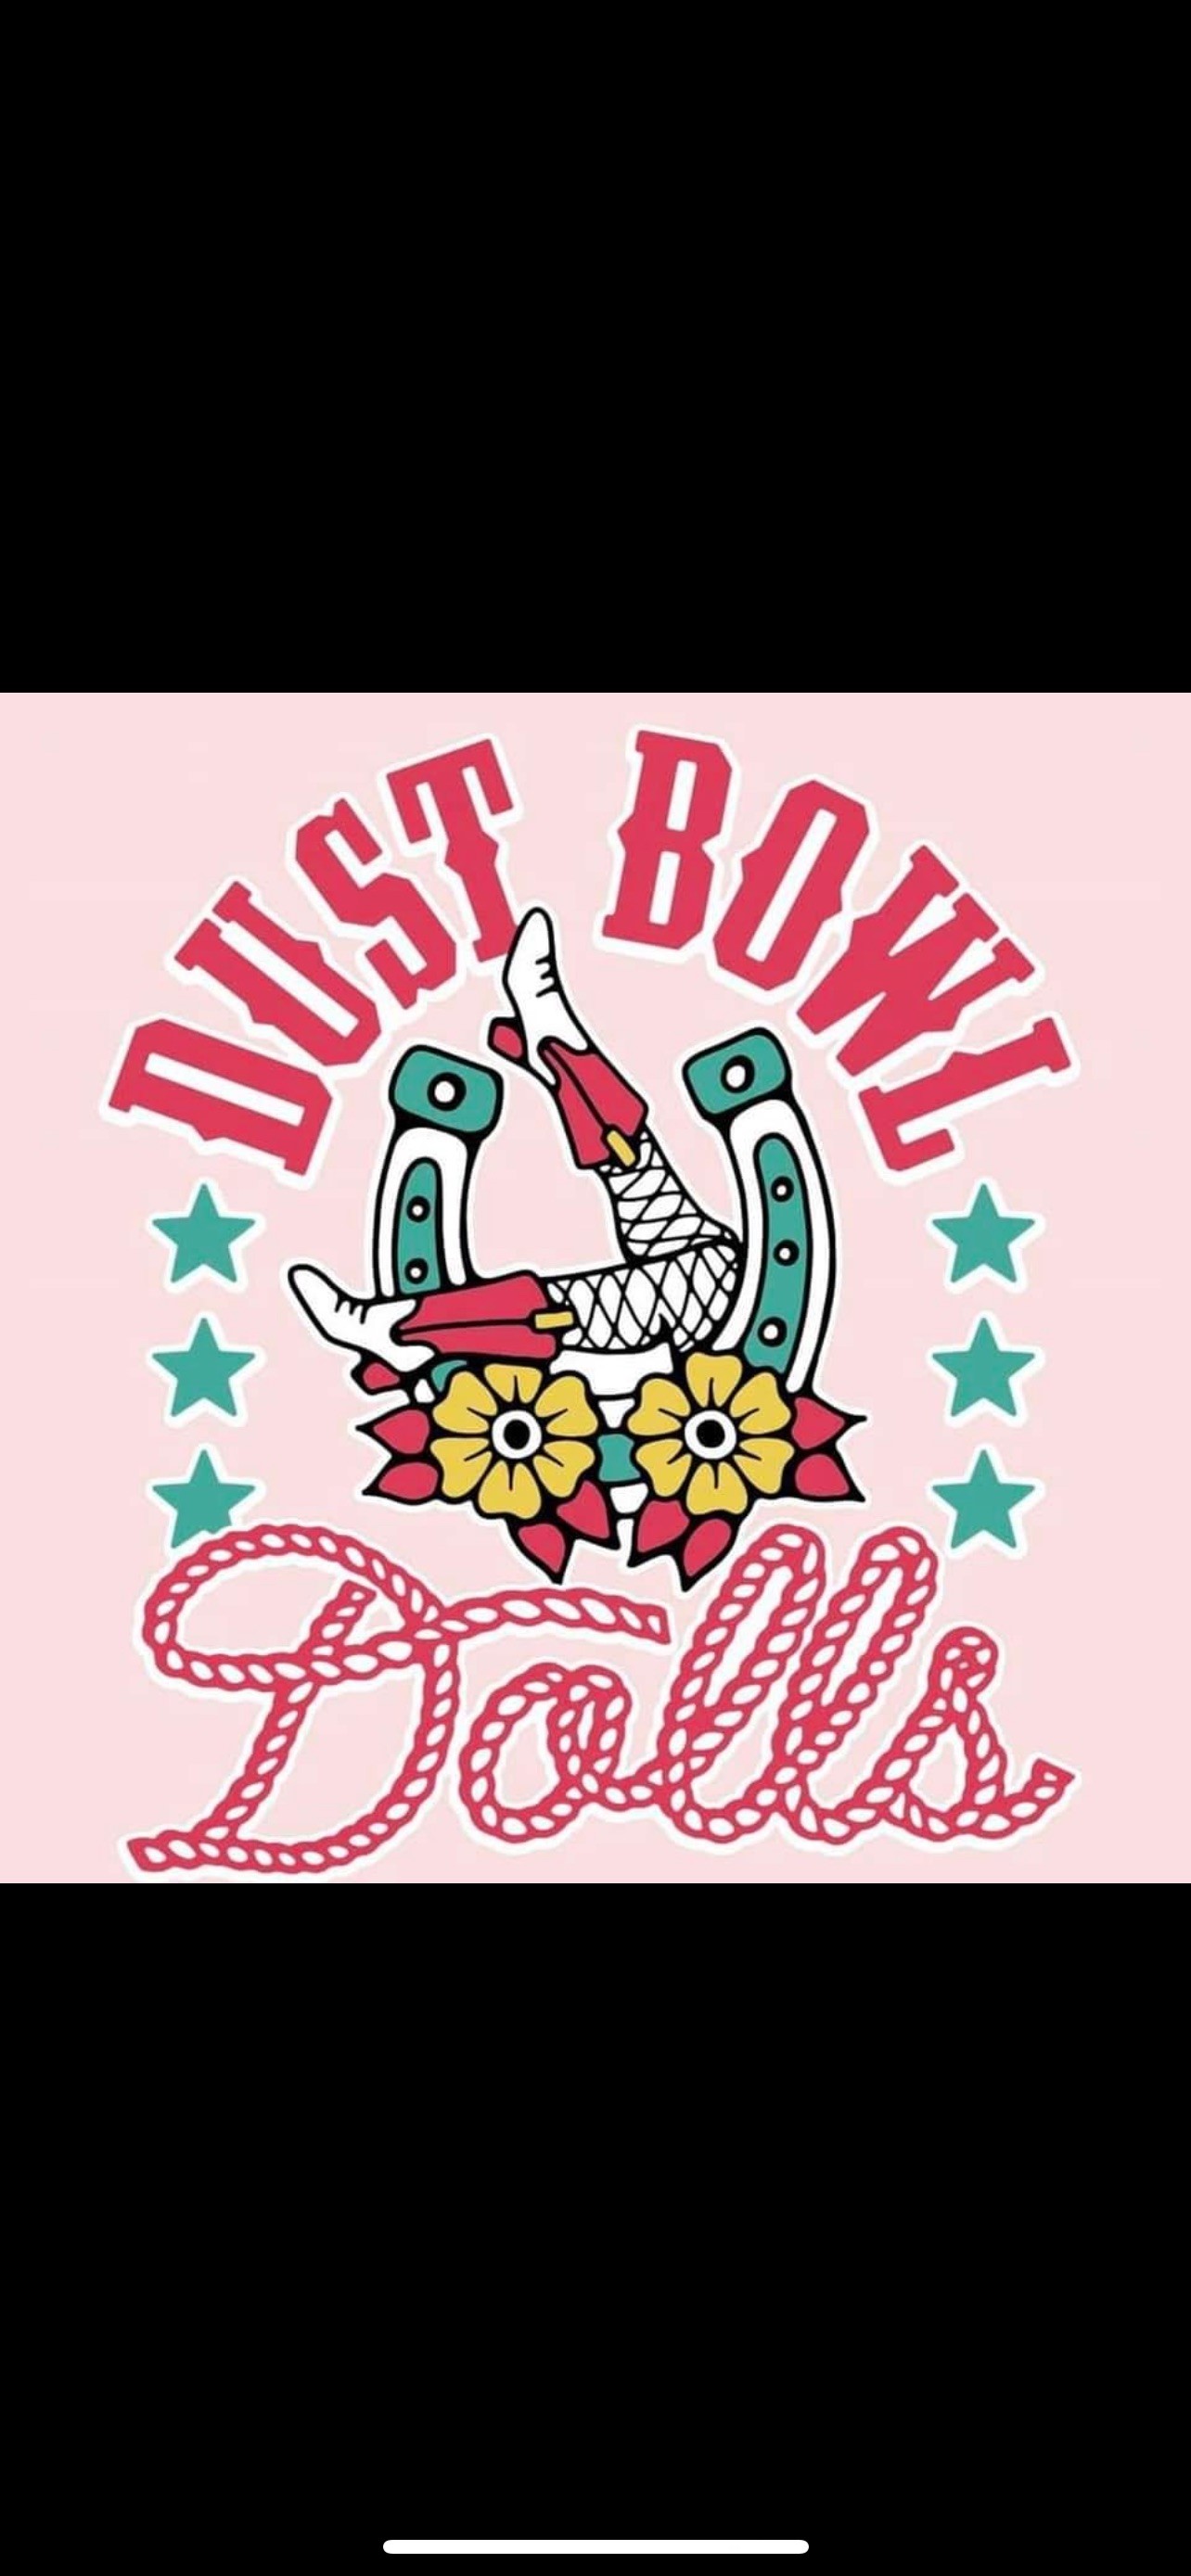 Dust Bowl Dolls Burlesque Show Live at RED  on jun. 22, 21:00@Boondocks Tavern - Compra entradas y obtén información enBoondocks Tavern 